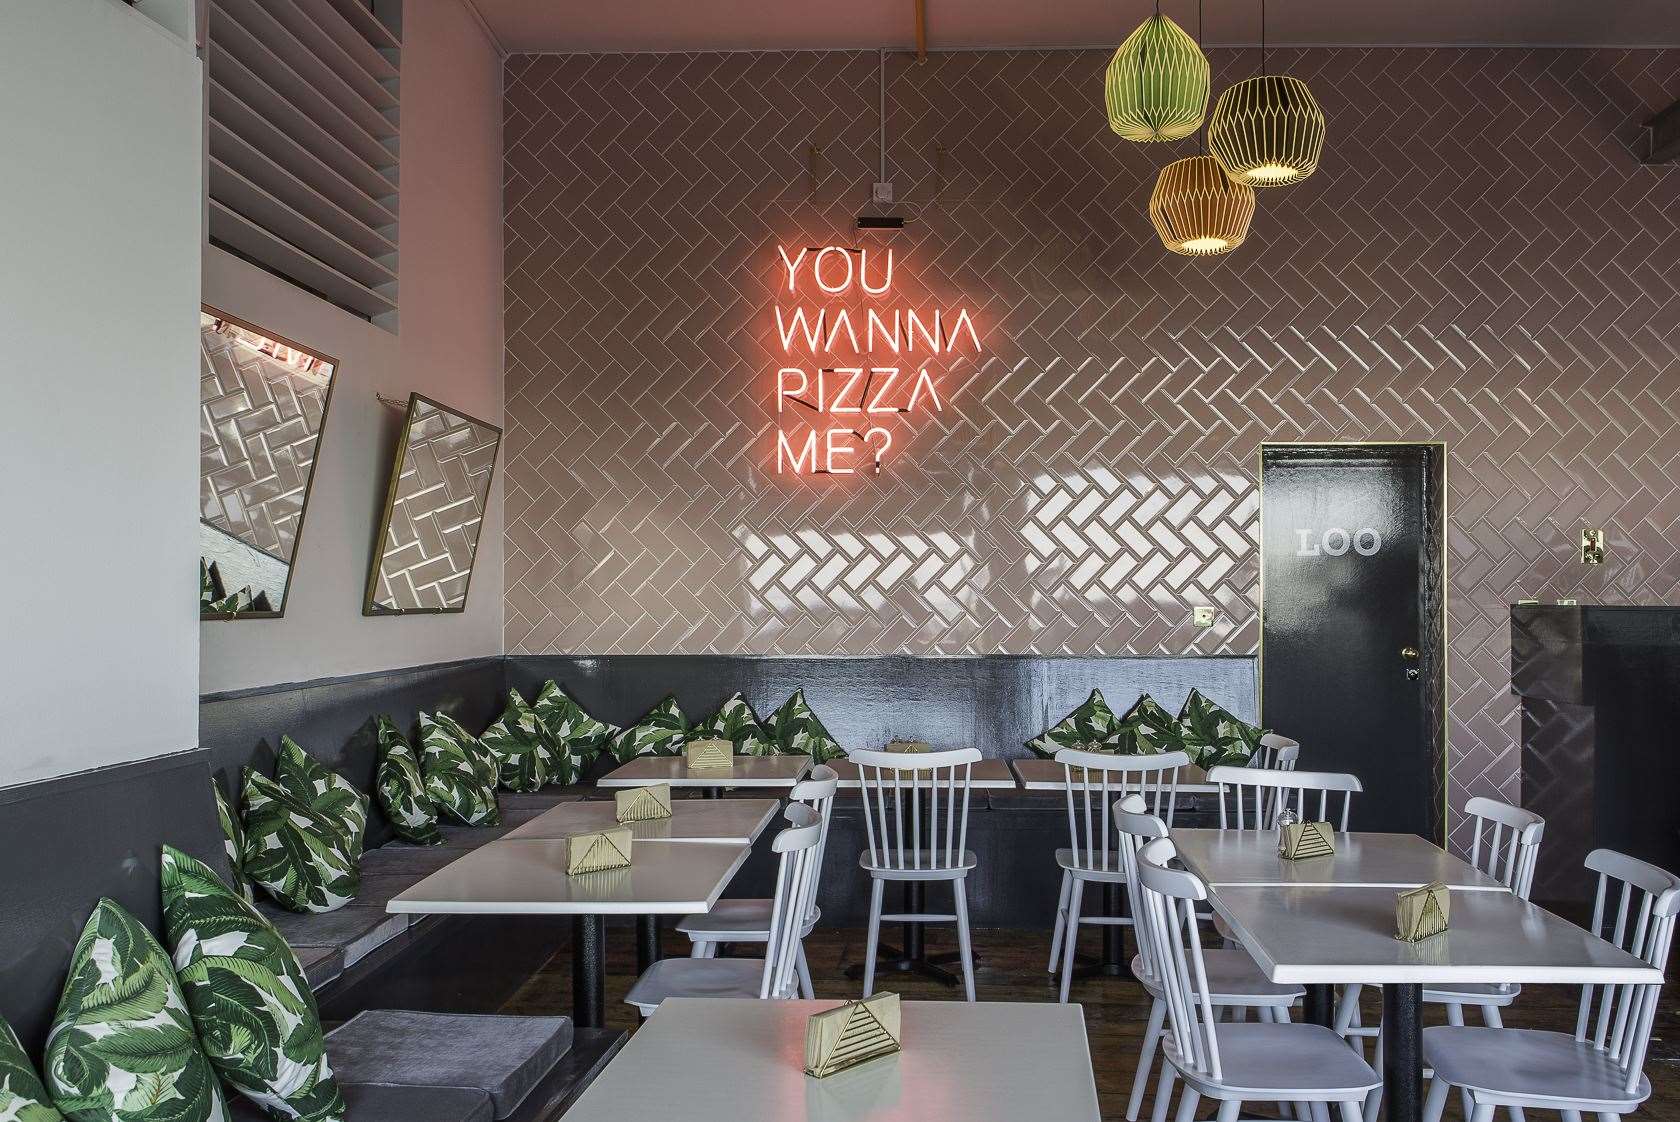 Inside the popular GB Pizza restaurant in Margate